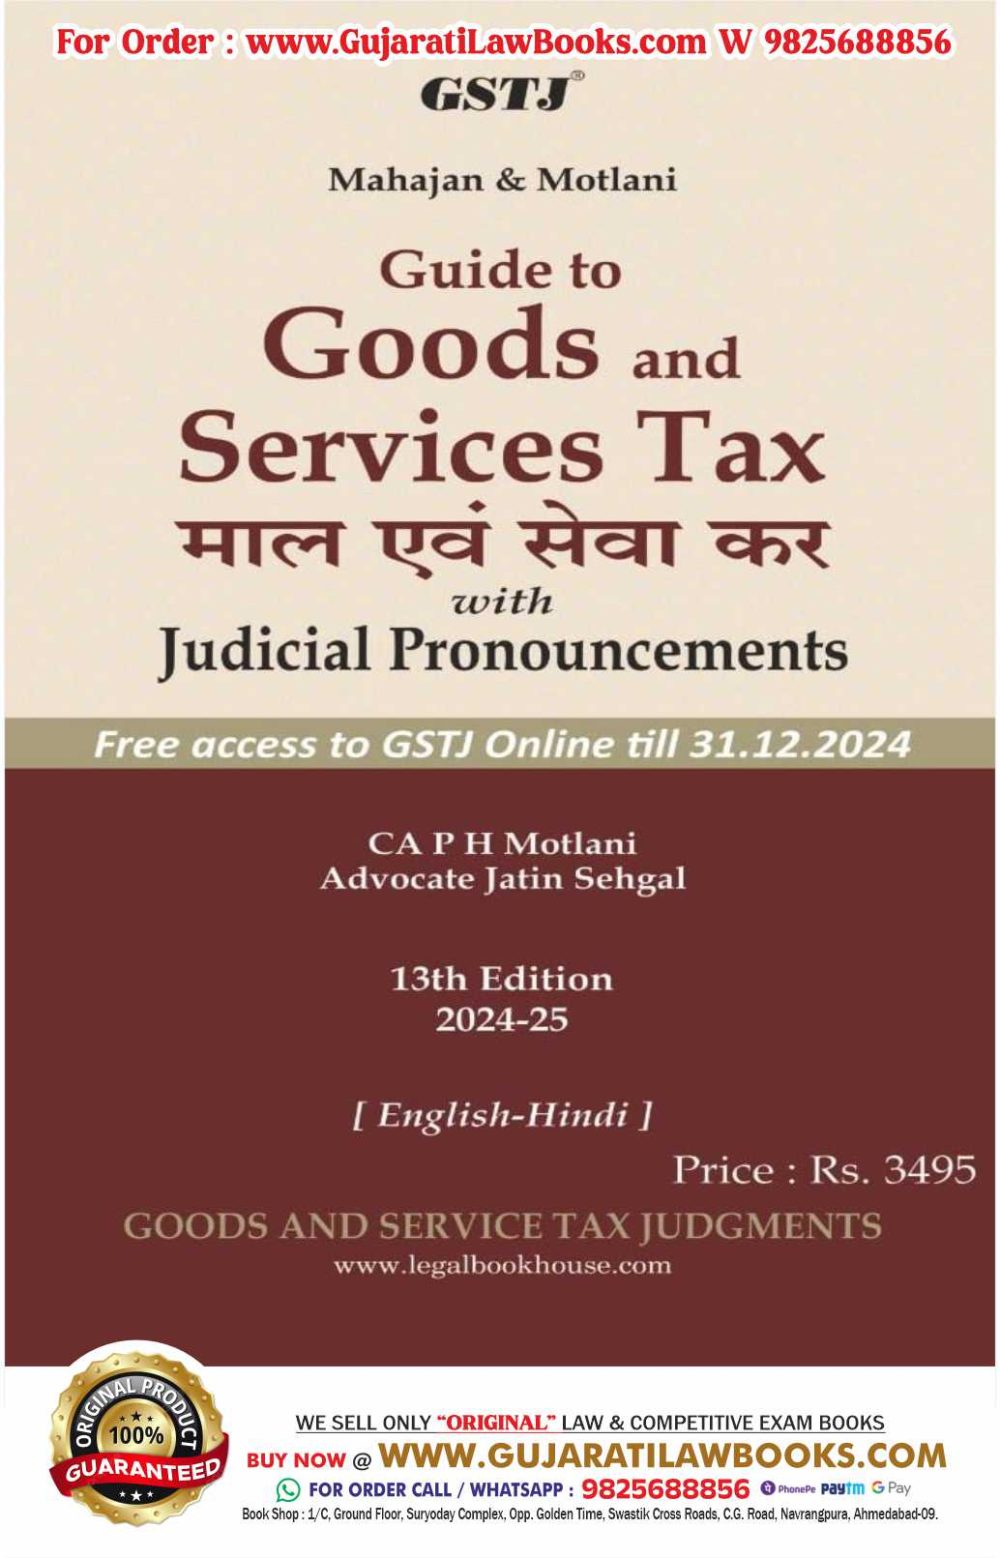 Mahajan & Motlanis - GUIDE TO GST - GOODS AND SERVICE TAX IN ENGLISH + HINDI - Latest 13th Edition 2024-25